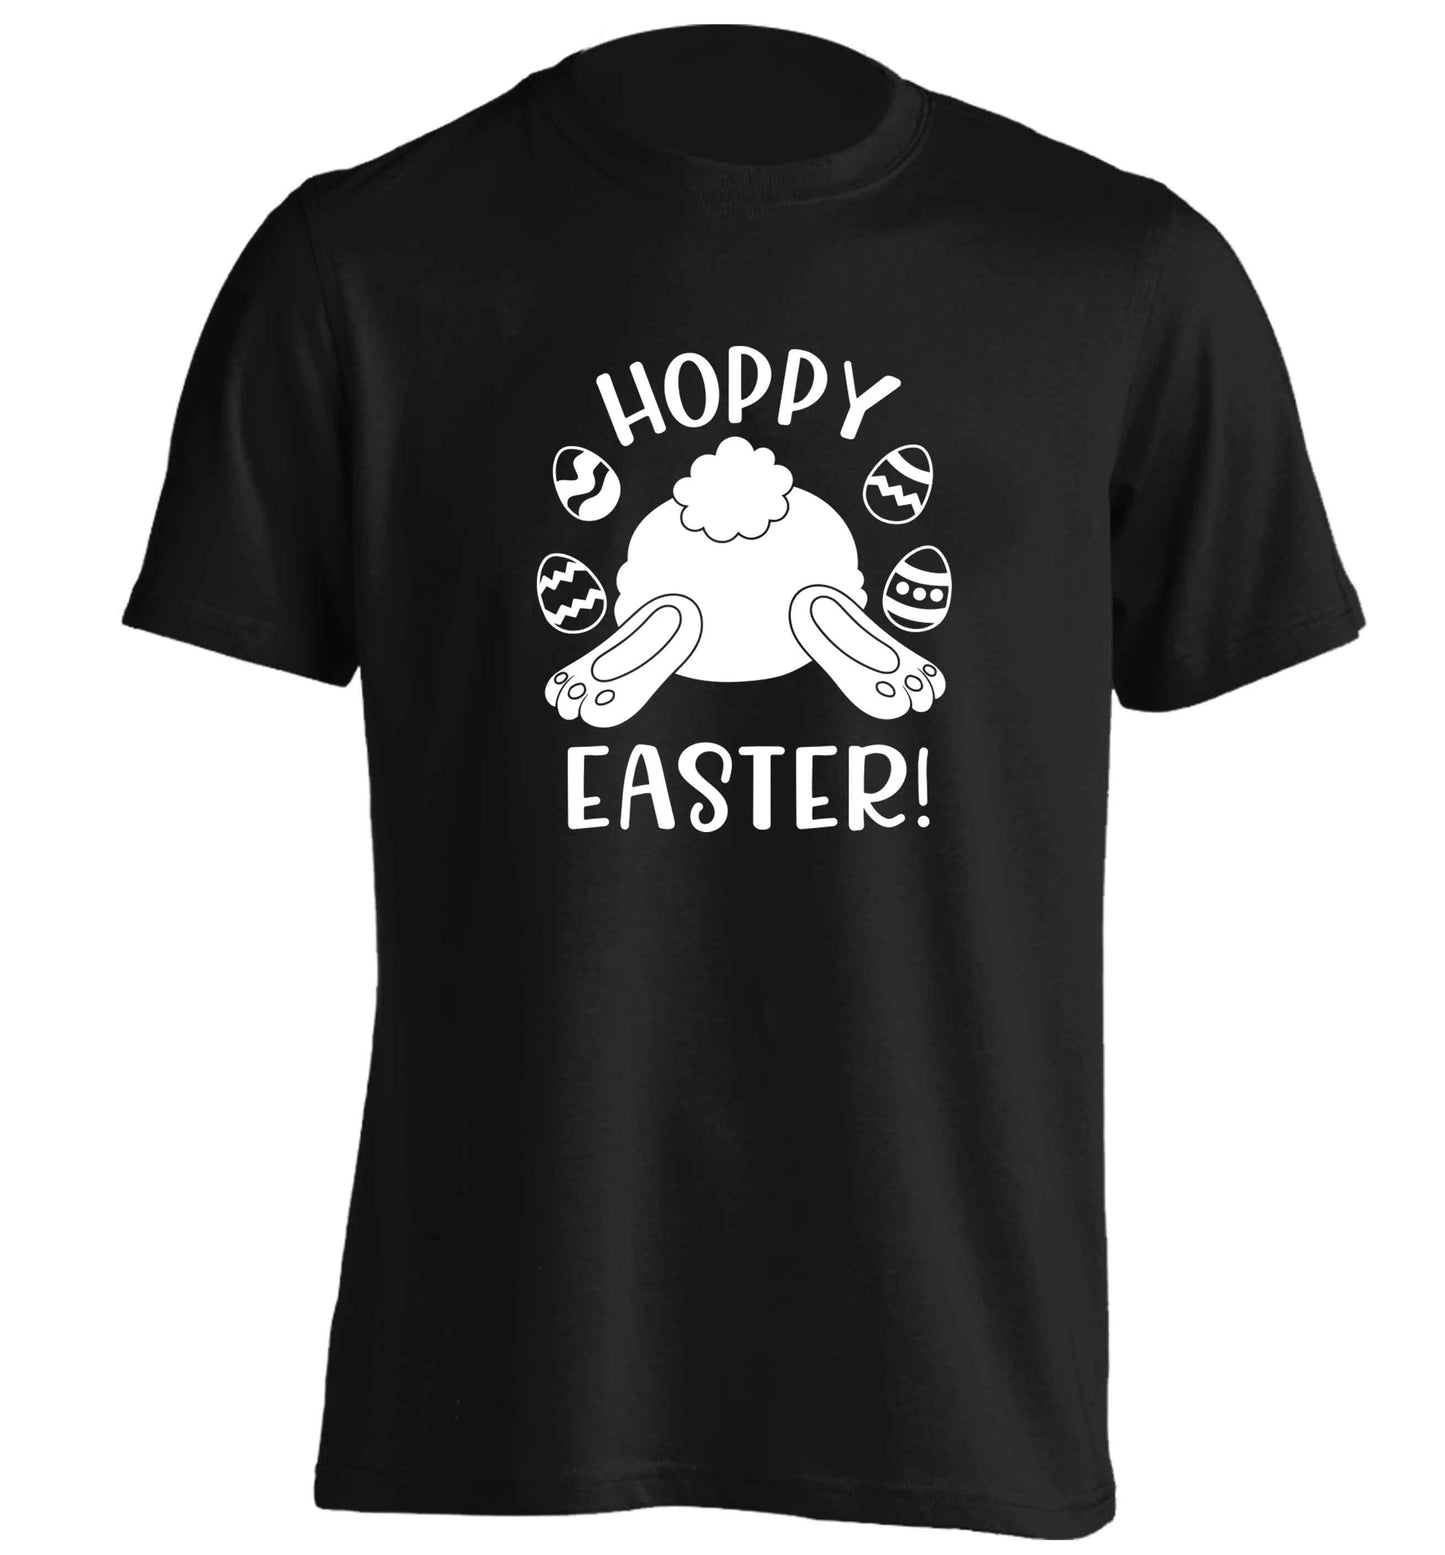 Hoppy Easter adults unisex black Tshirt 2XL